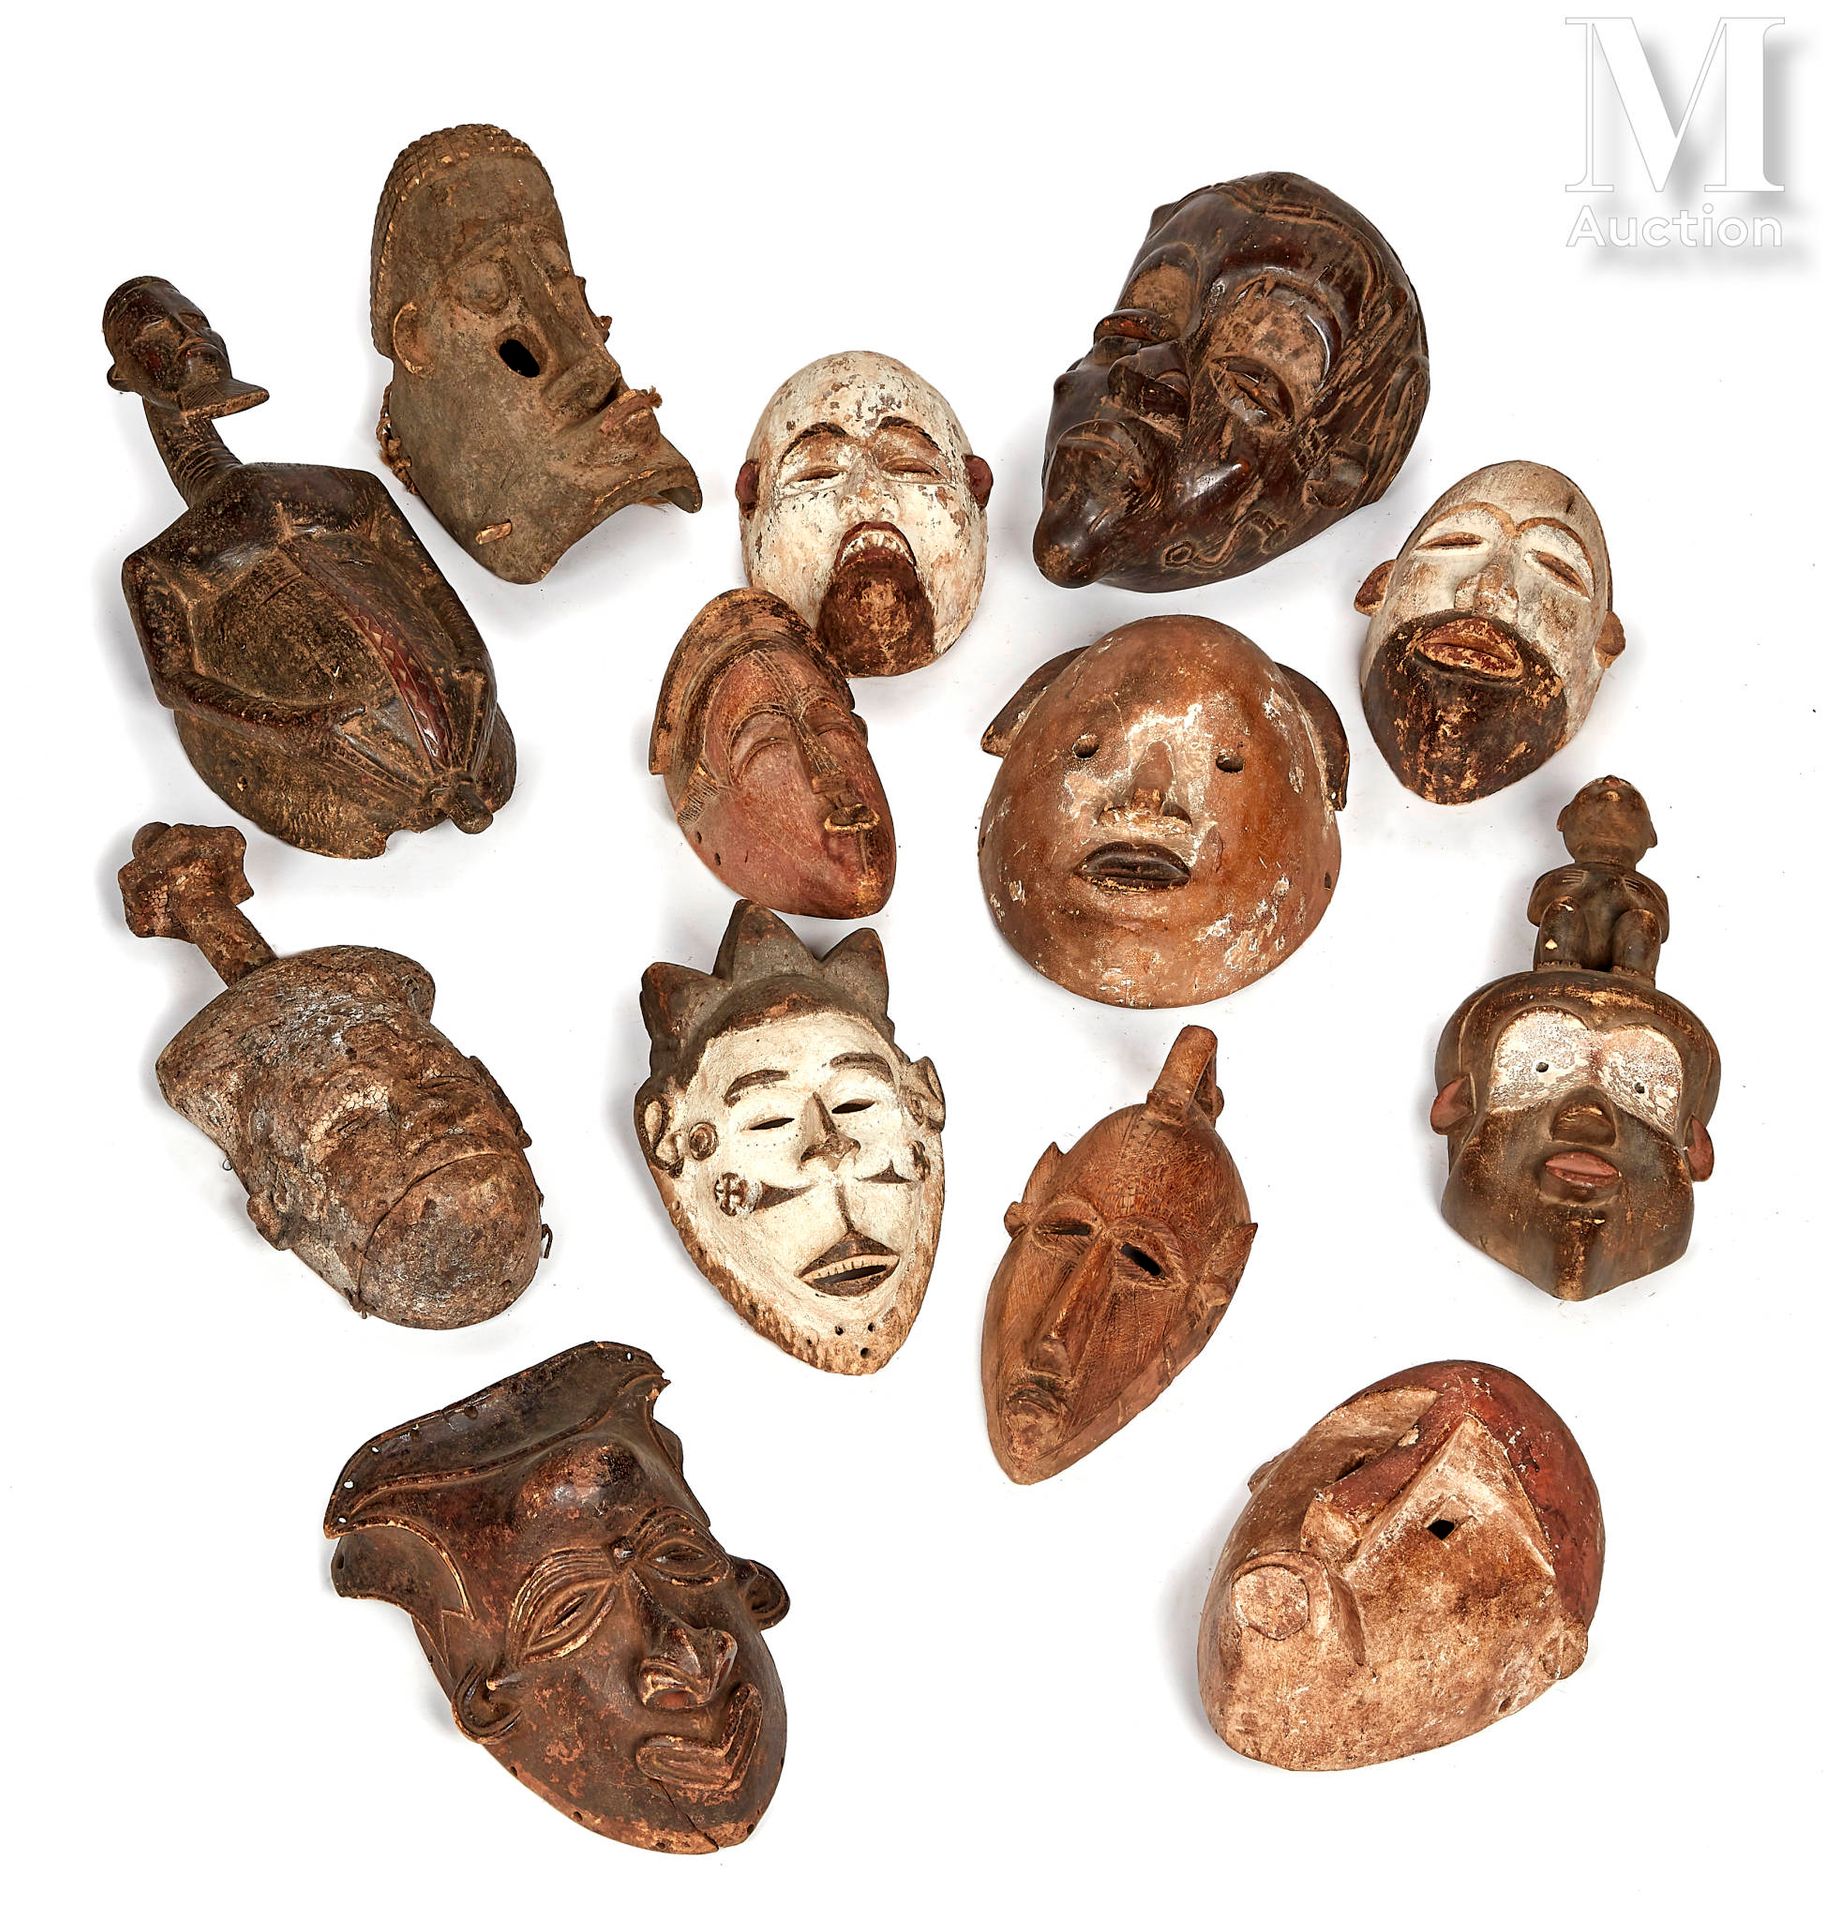 14 masques 木制的
古代非洲的风格